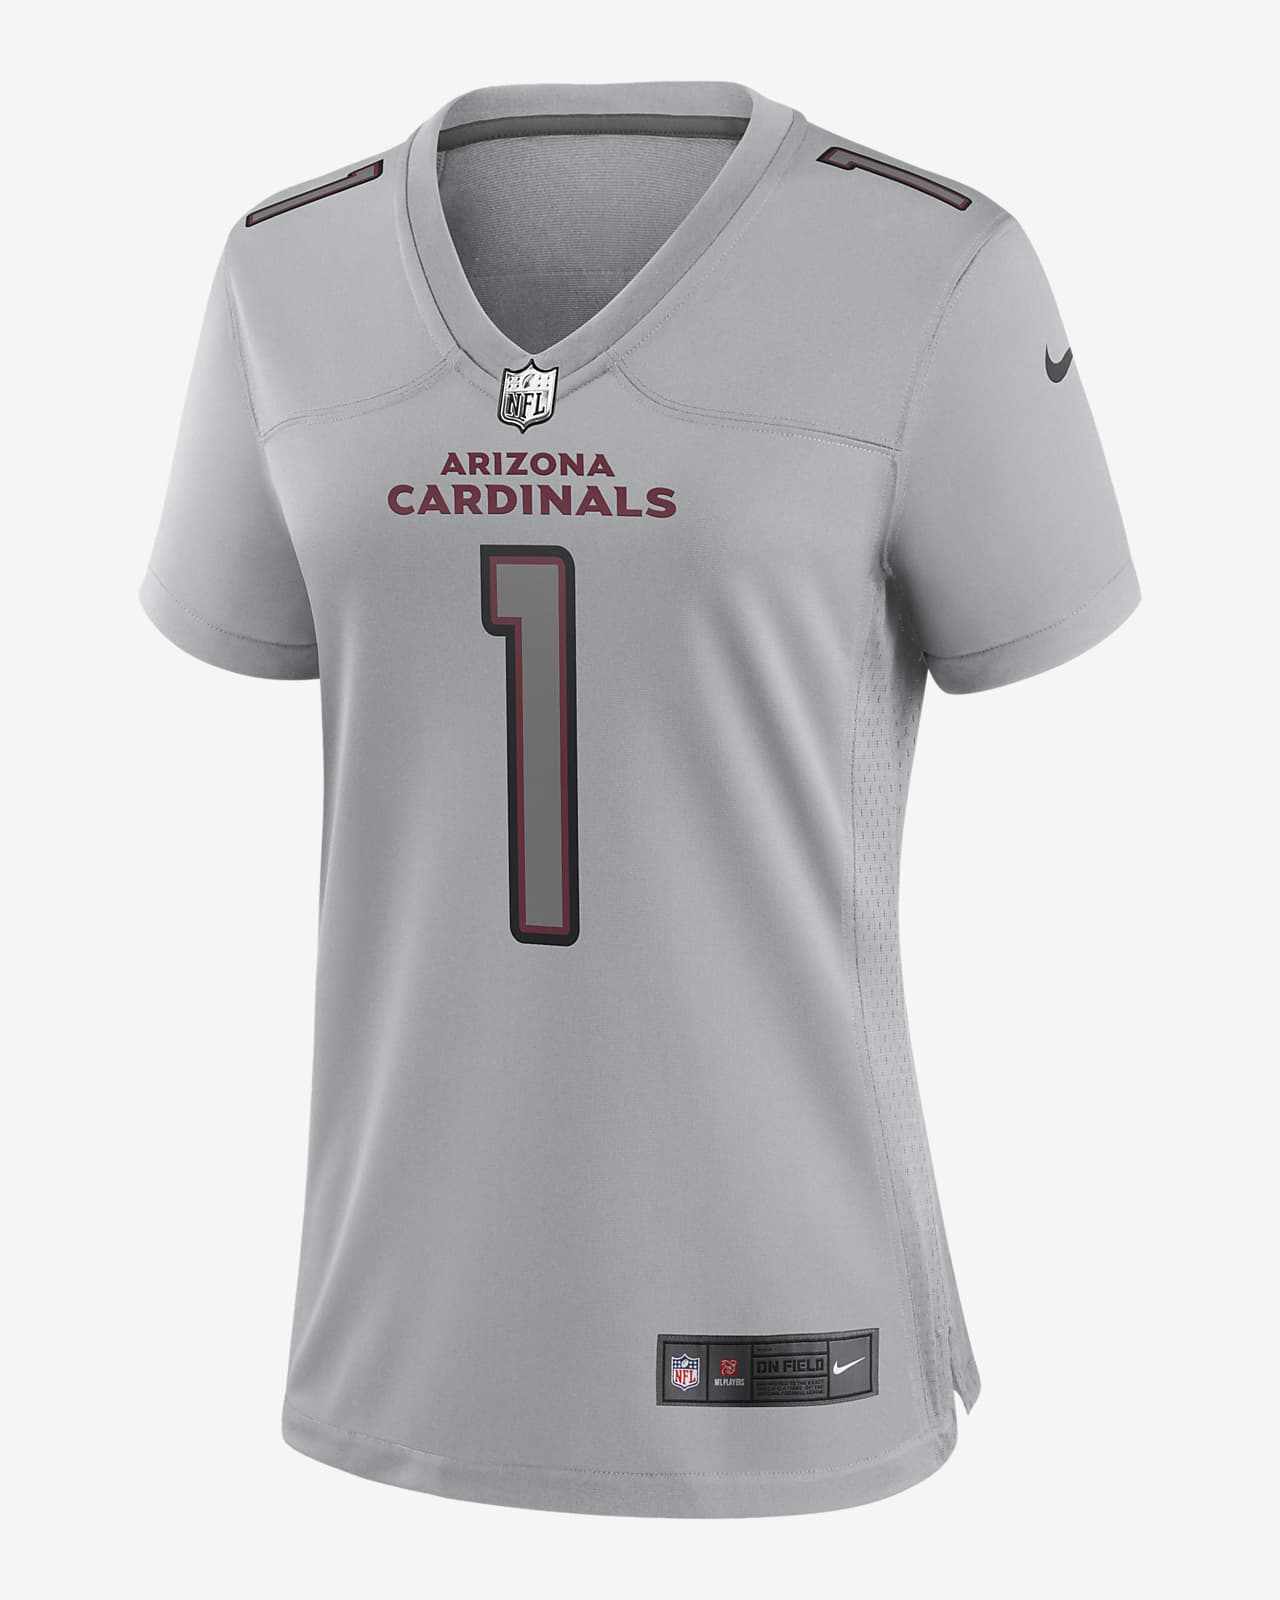 NFL Arizona Cardinals Atmosphere (Kyler Murray) Women's Fashion Football Jersey